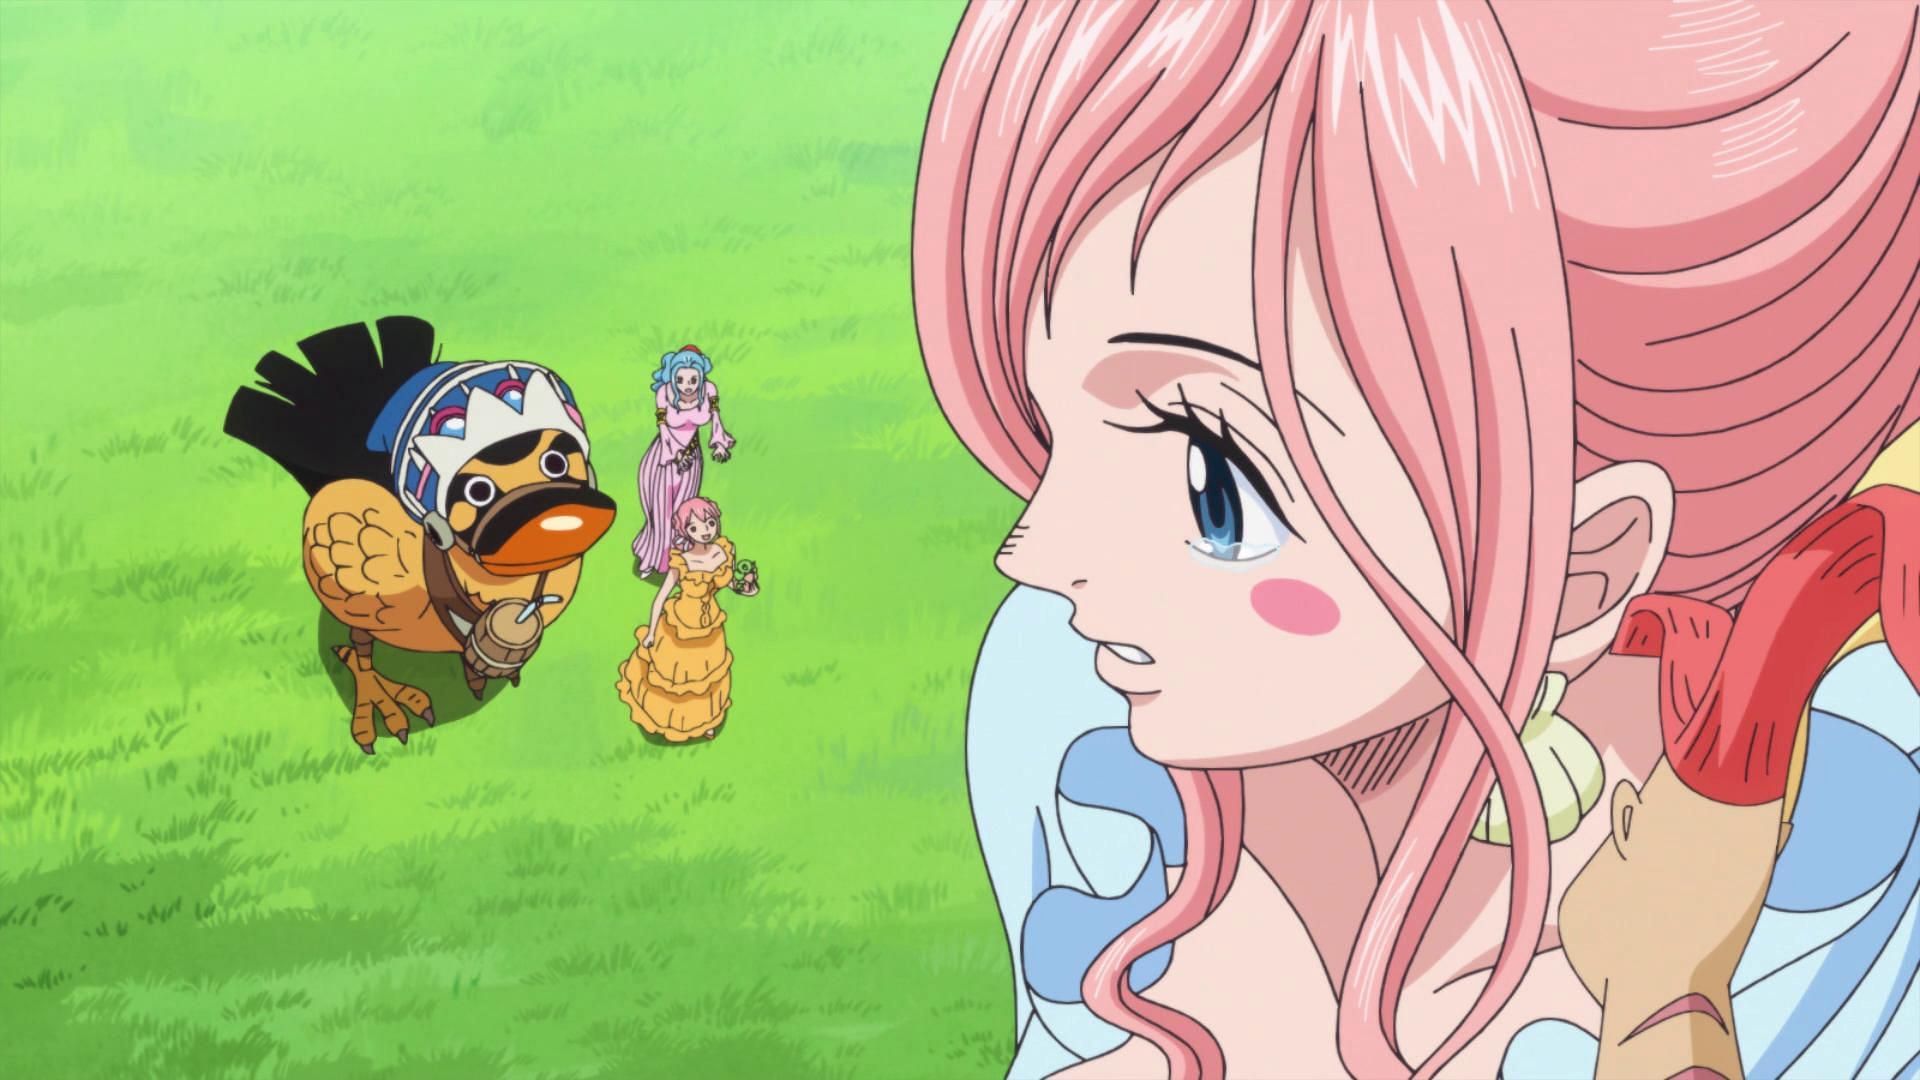 Vivi immediately befriended Shirahoshi (Image via Toei Animation, One Piece)